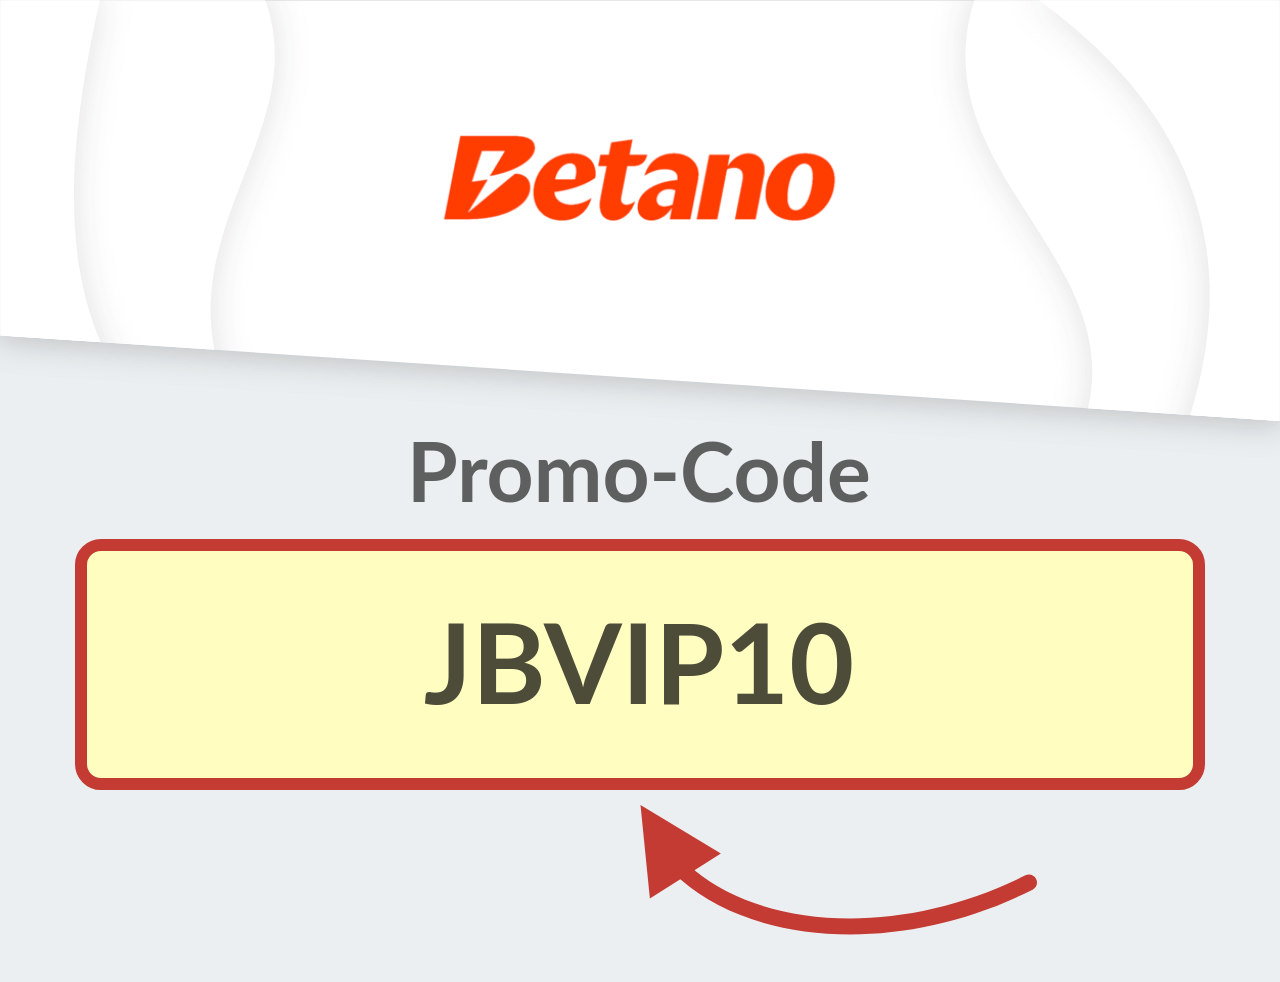 Betano Promo Code